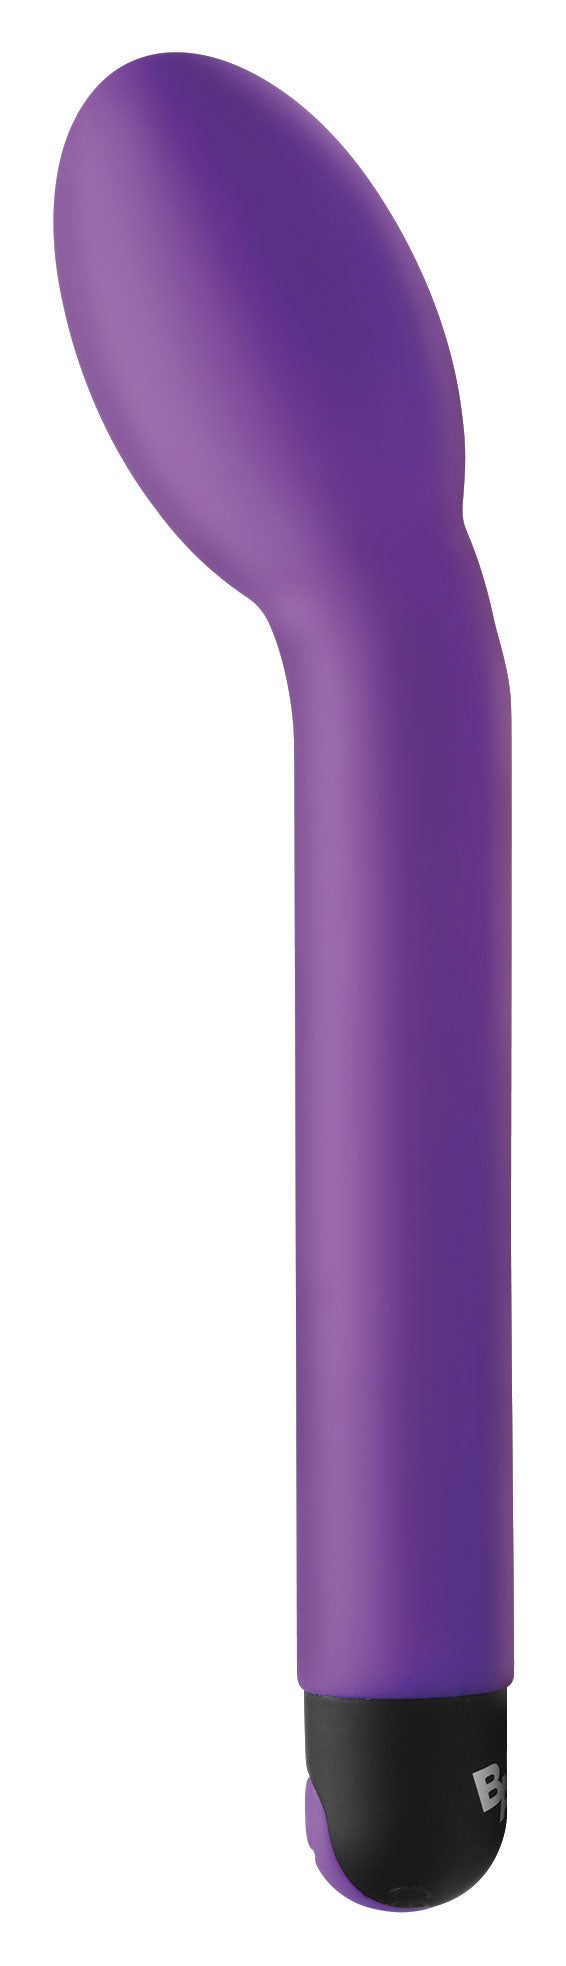 10x G-Spot Vibrator - Purple BNG-AG759-PUR